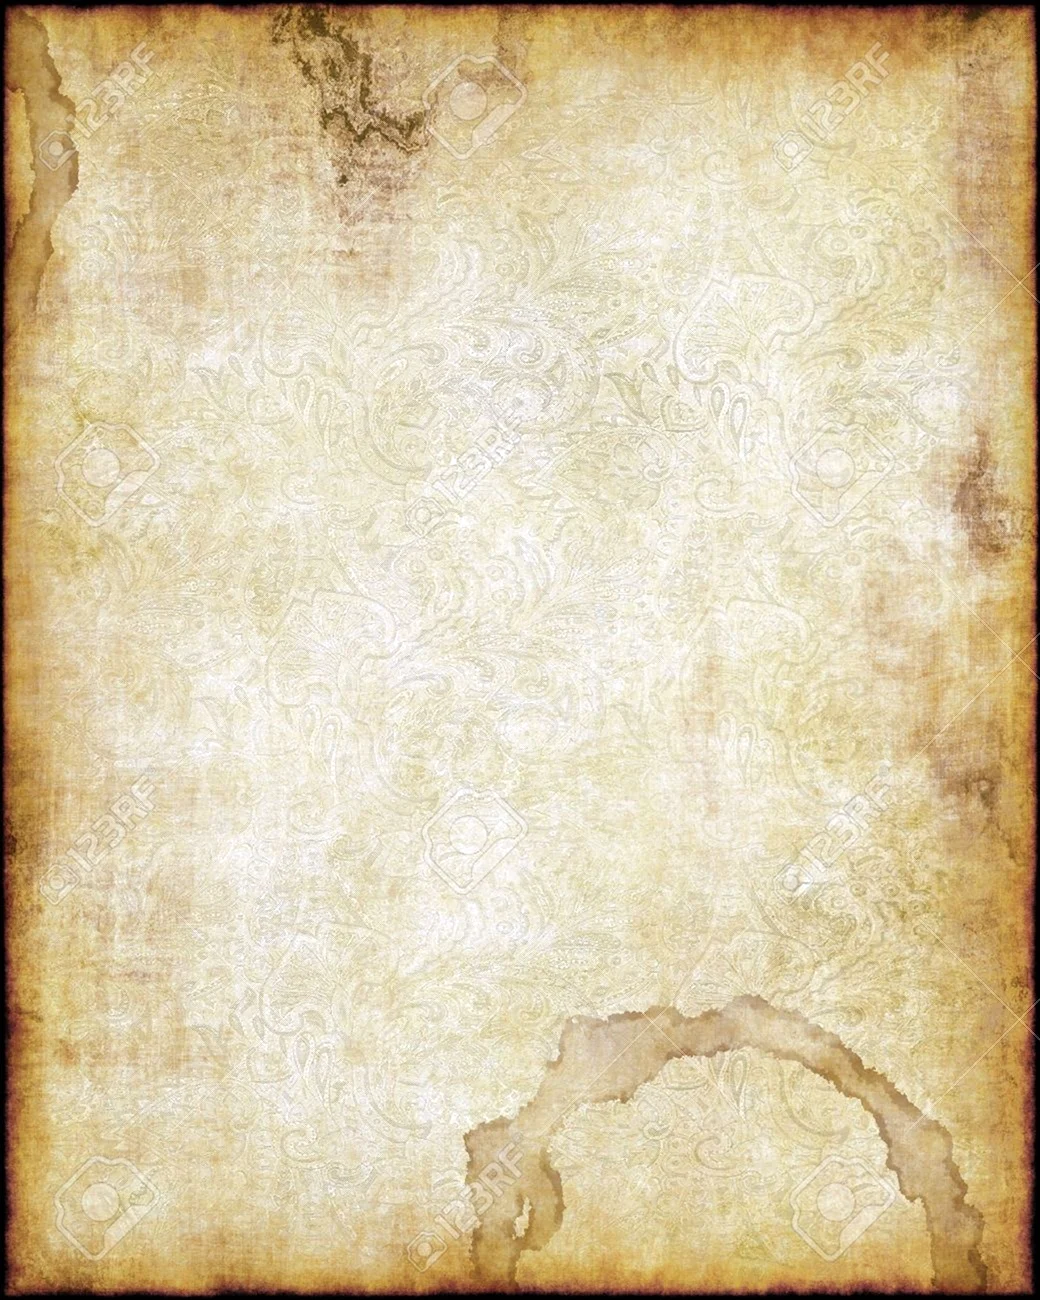 Старая карта на папирусе фон